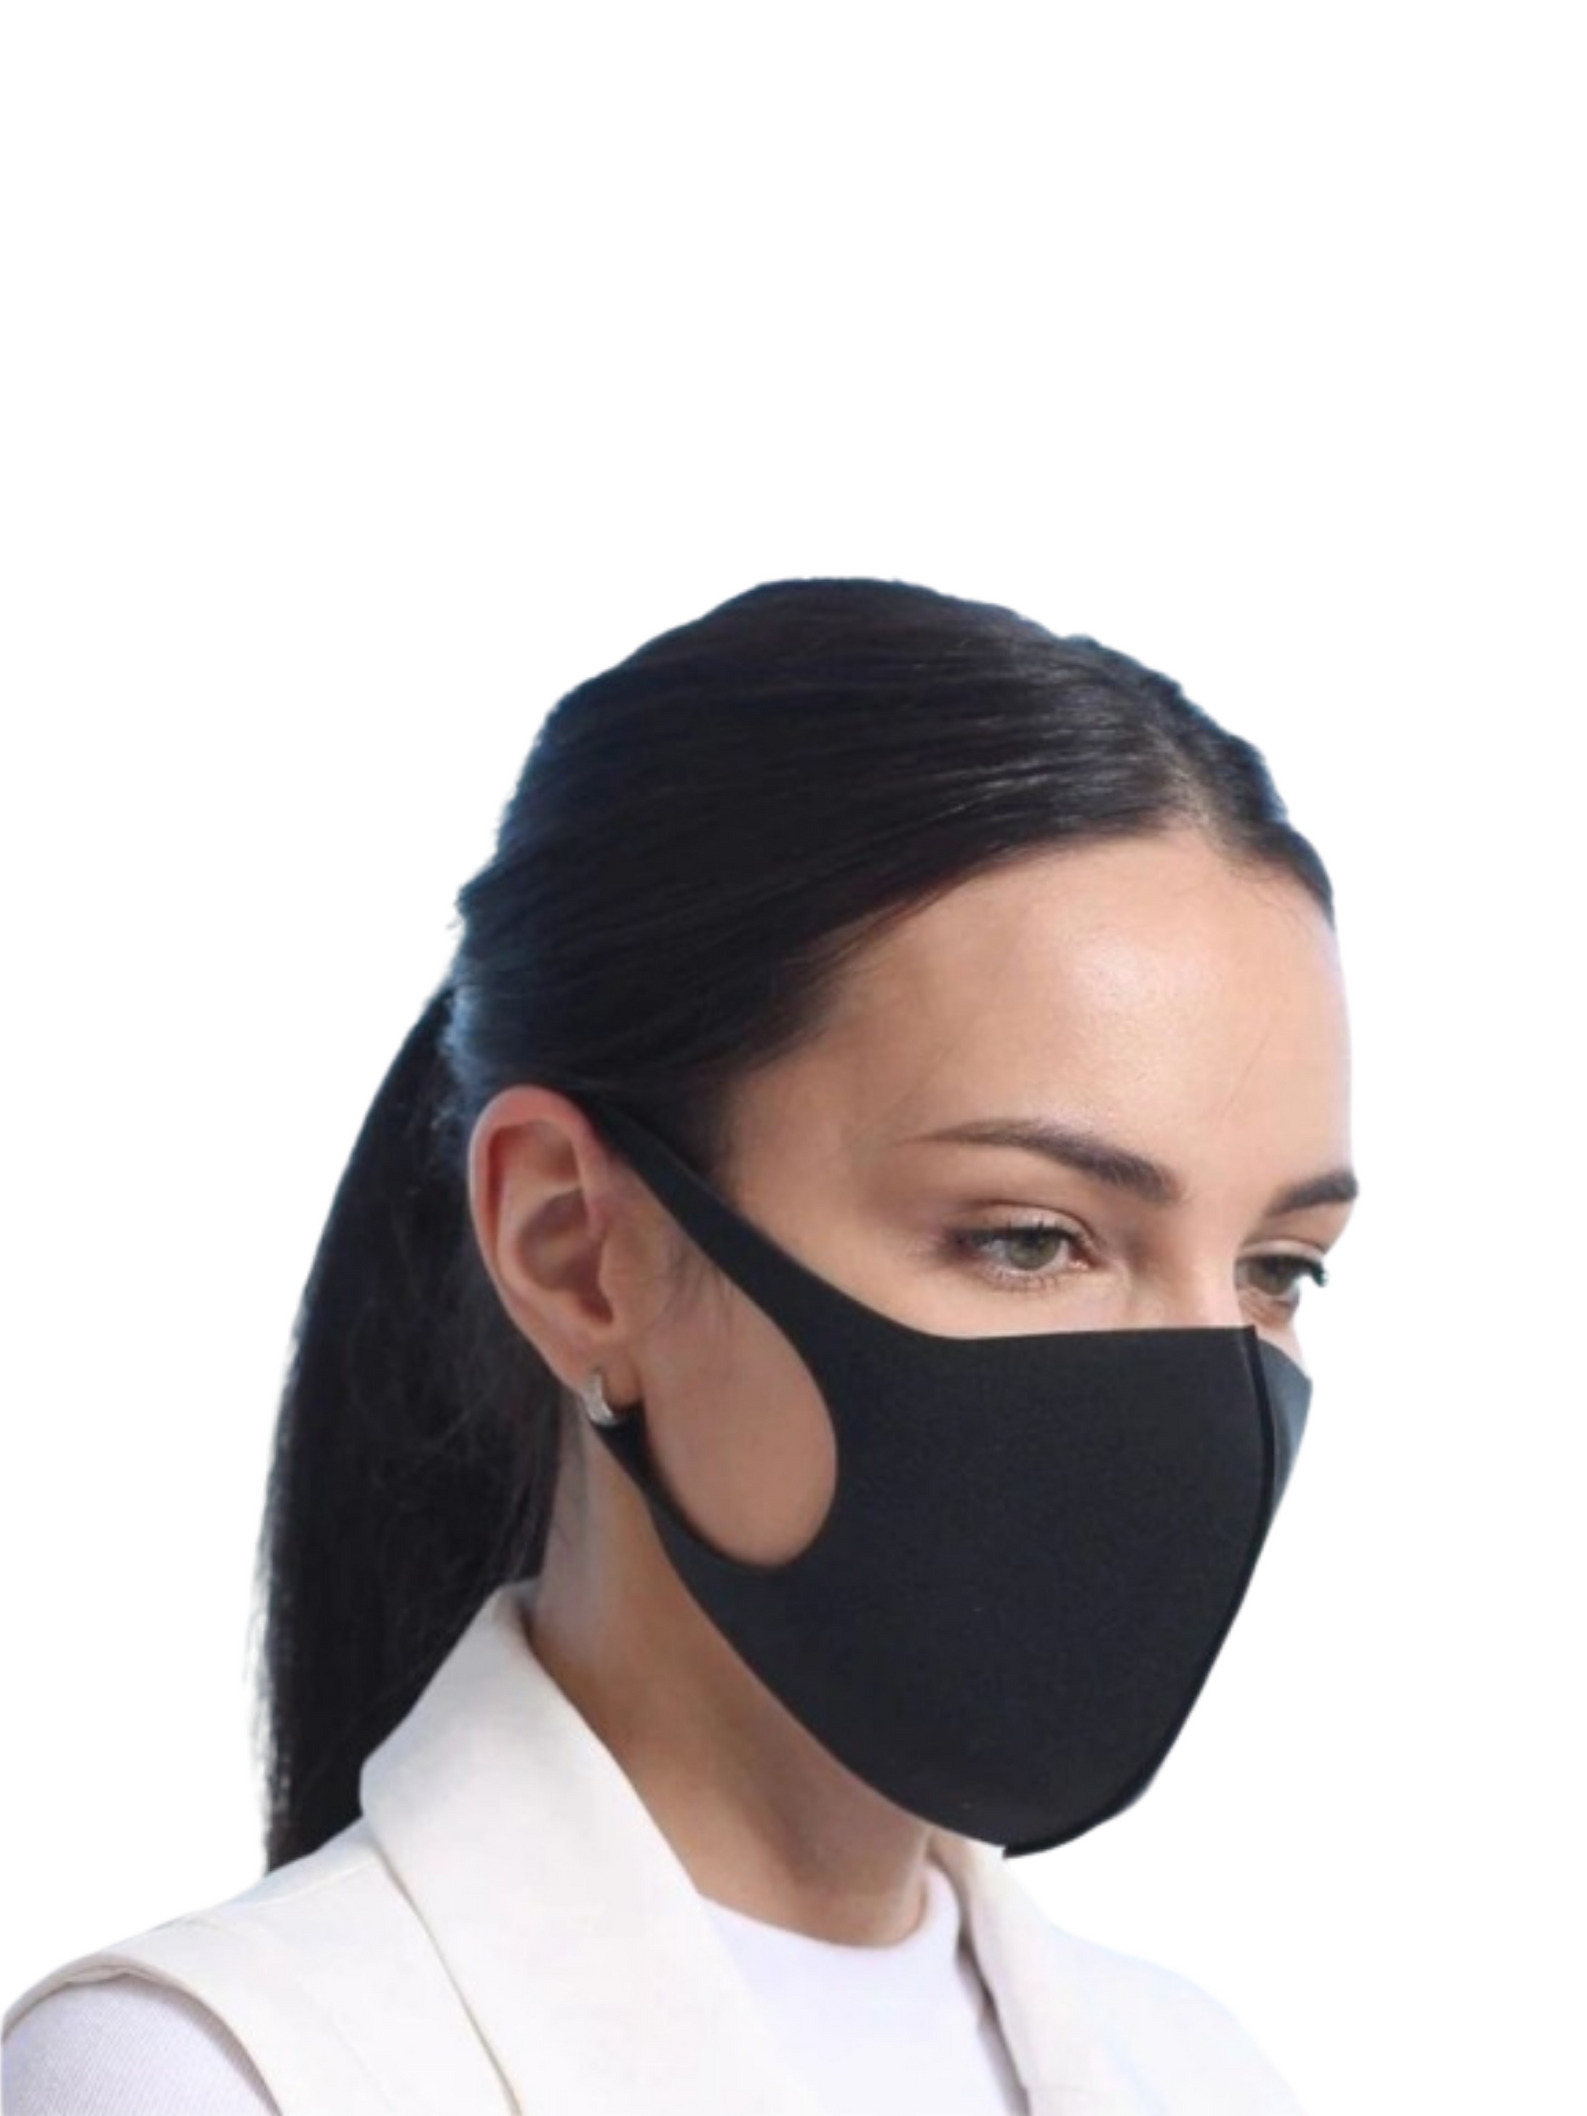 Быстрая маска позволяет. Маска для лица защитная многоразовая. Маска гигиеническая. Чёрная маска для лица медицинская. Маска для лица тканевая защитная.